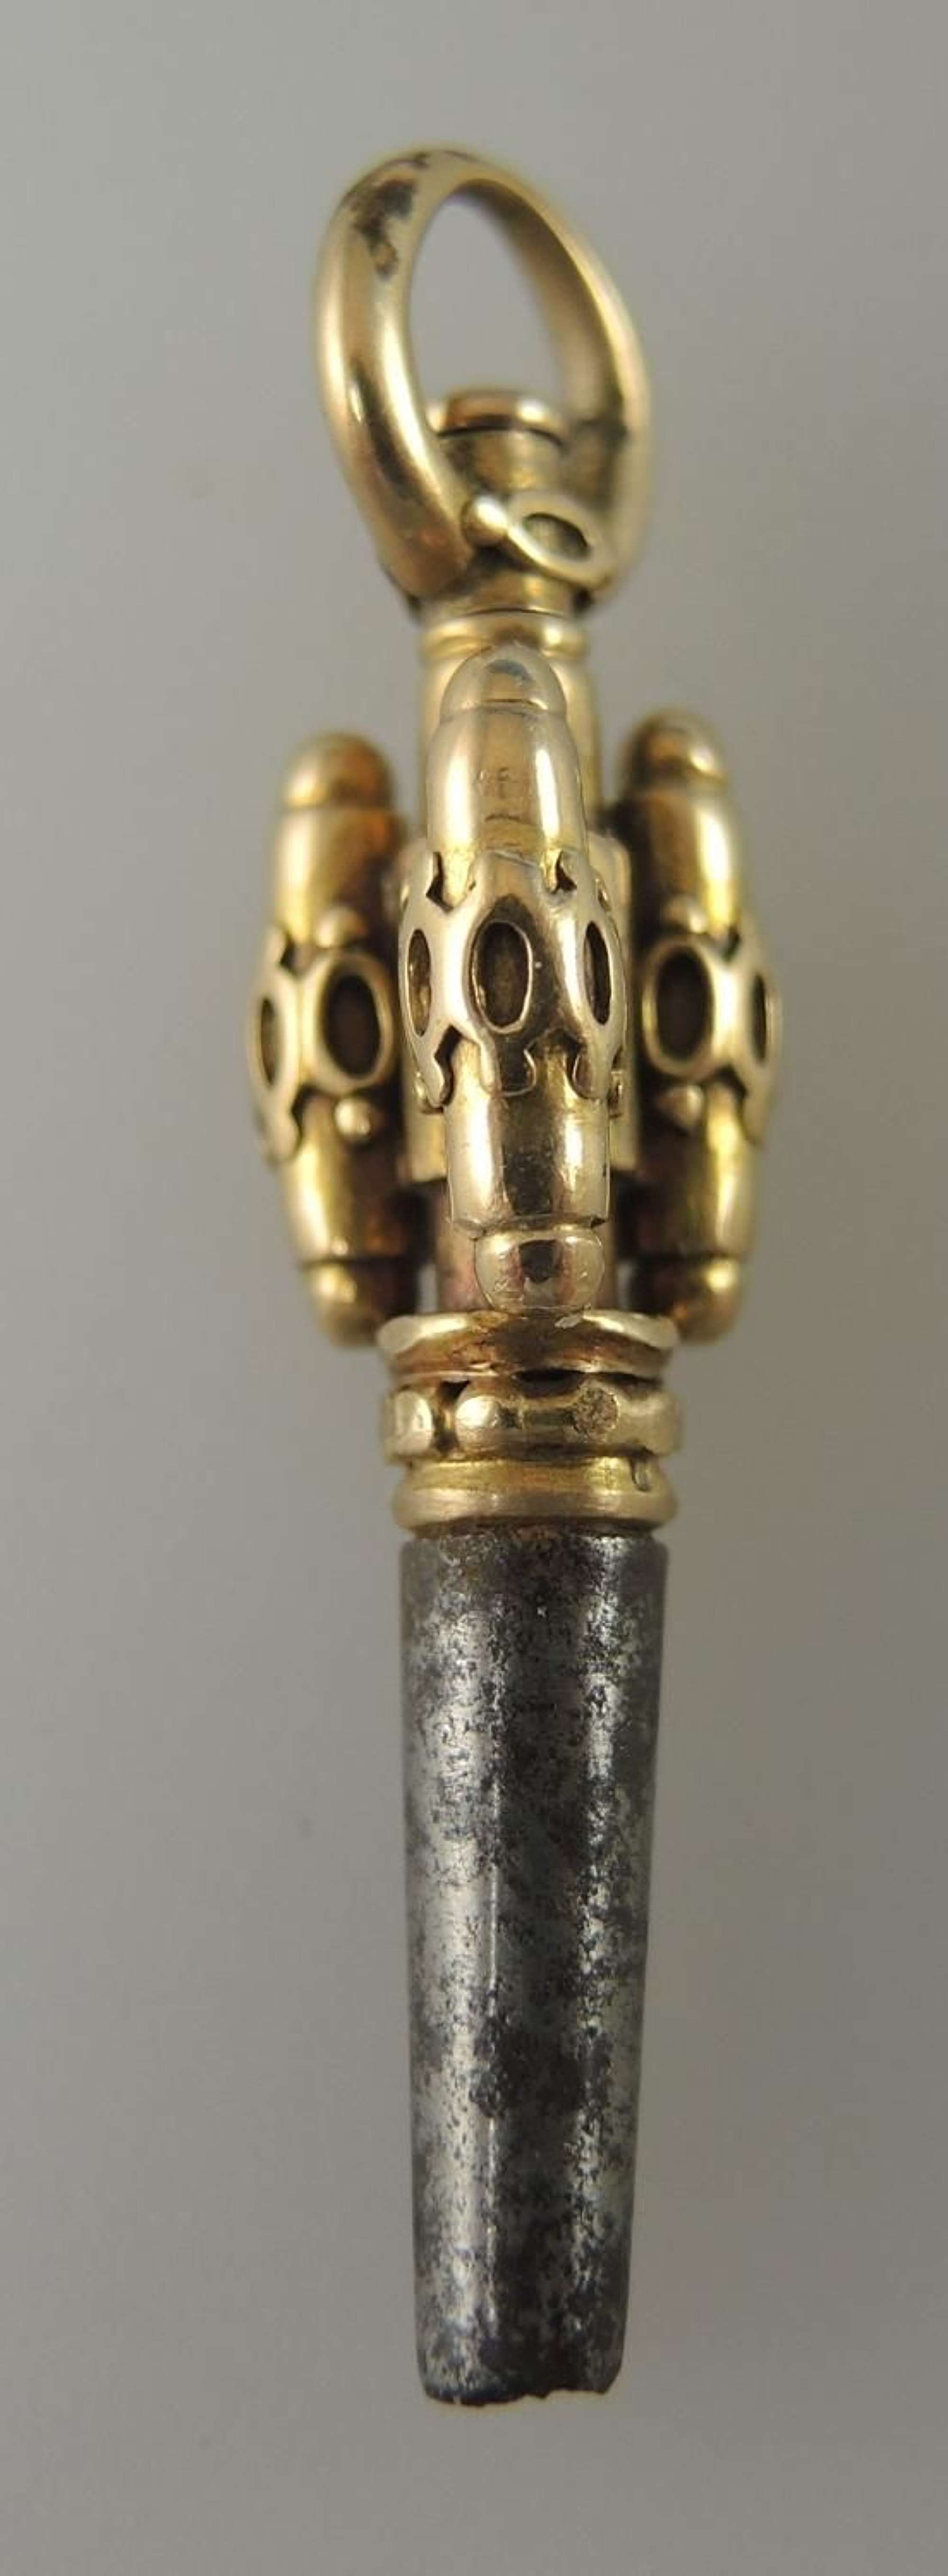 Unusual Top Quality 18K Gold Pocket Watch Key. Circa 1830